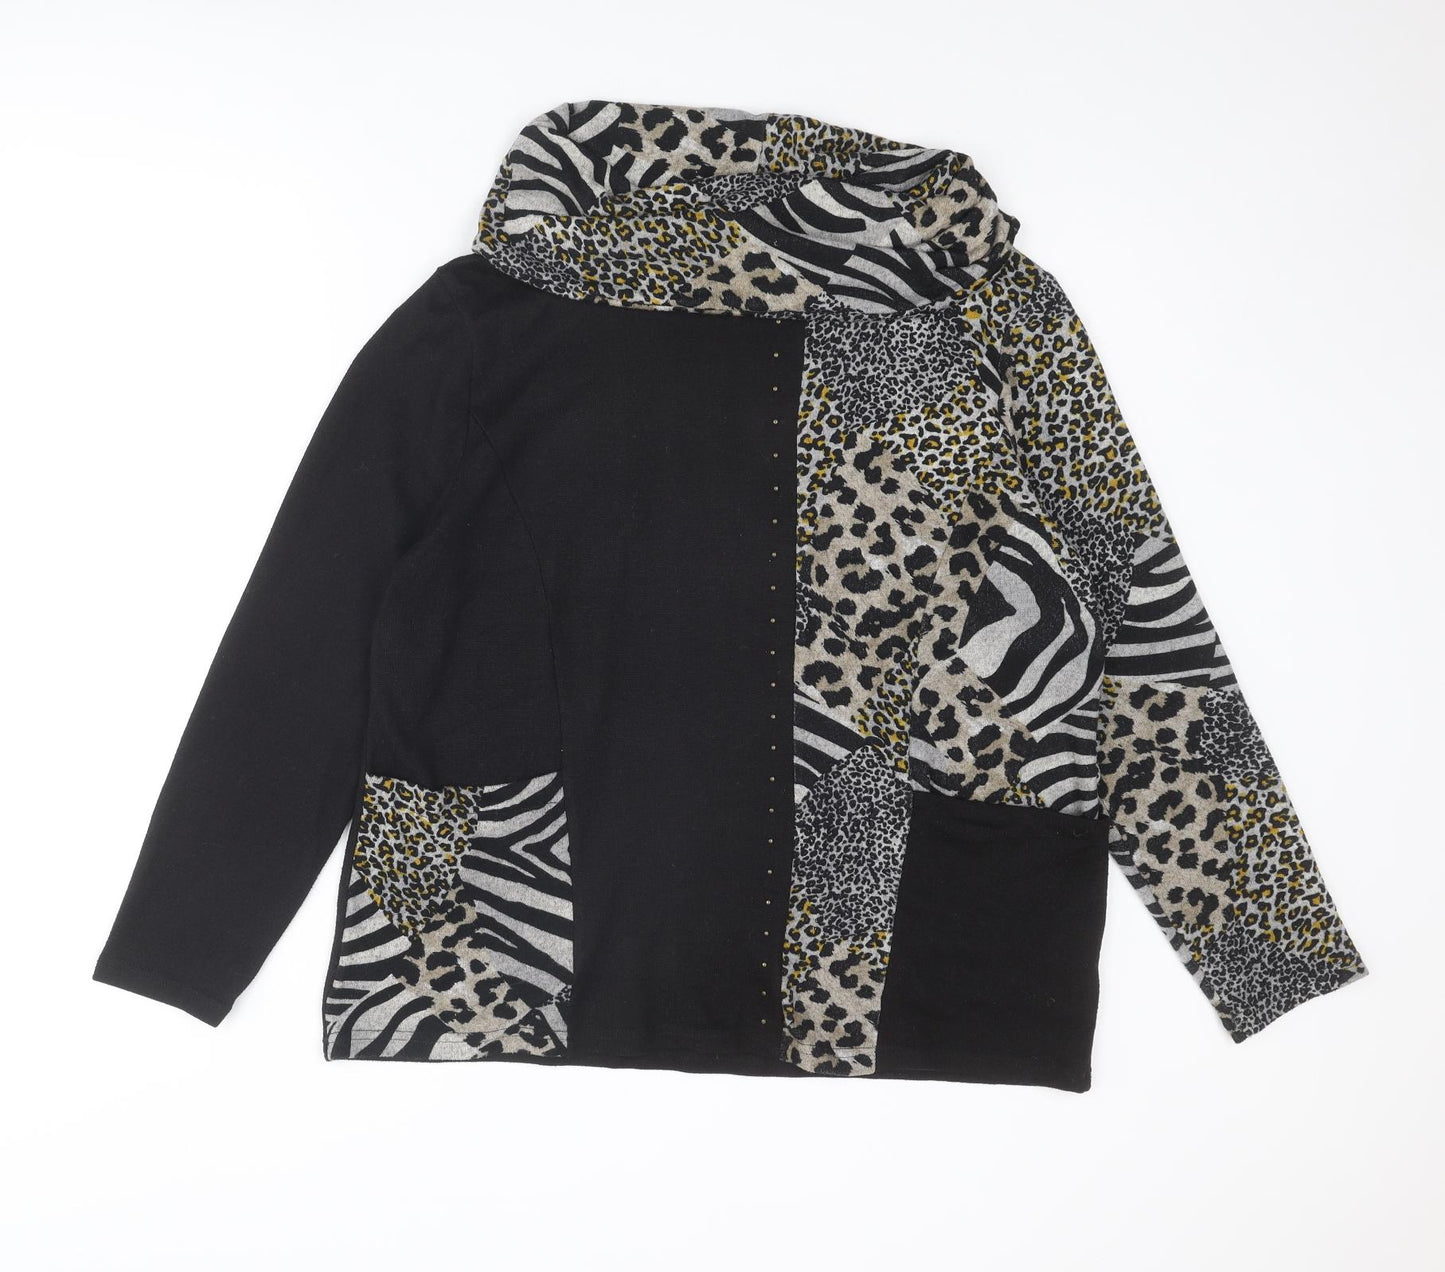 Anna Rose Womens Black Roll Neck Animal Print Polyester Pullover Jumper Size XL - Leopard Zebra Cheetah Pattern